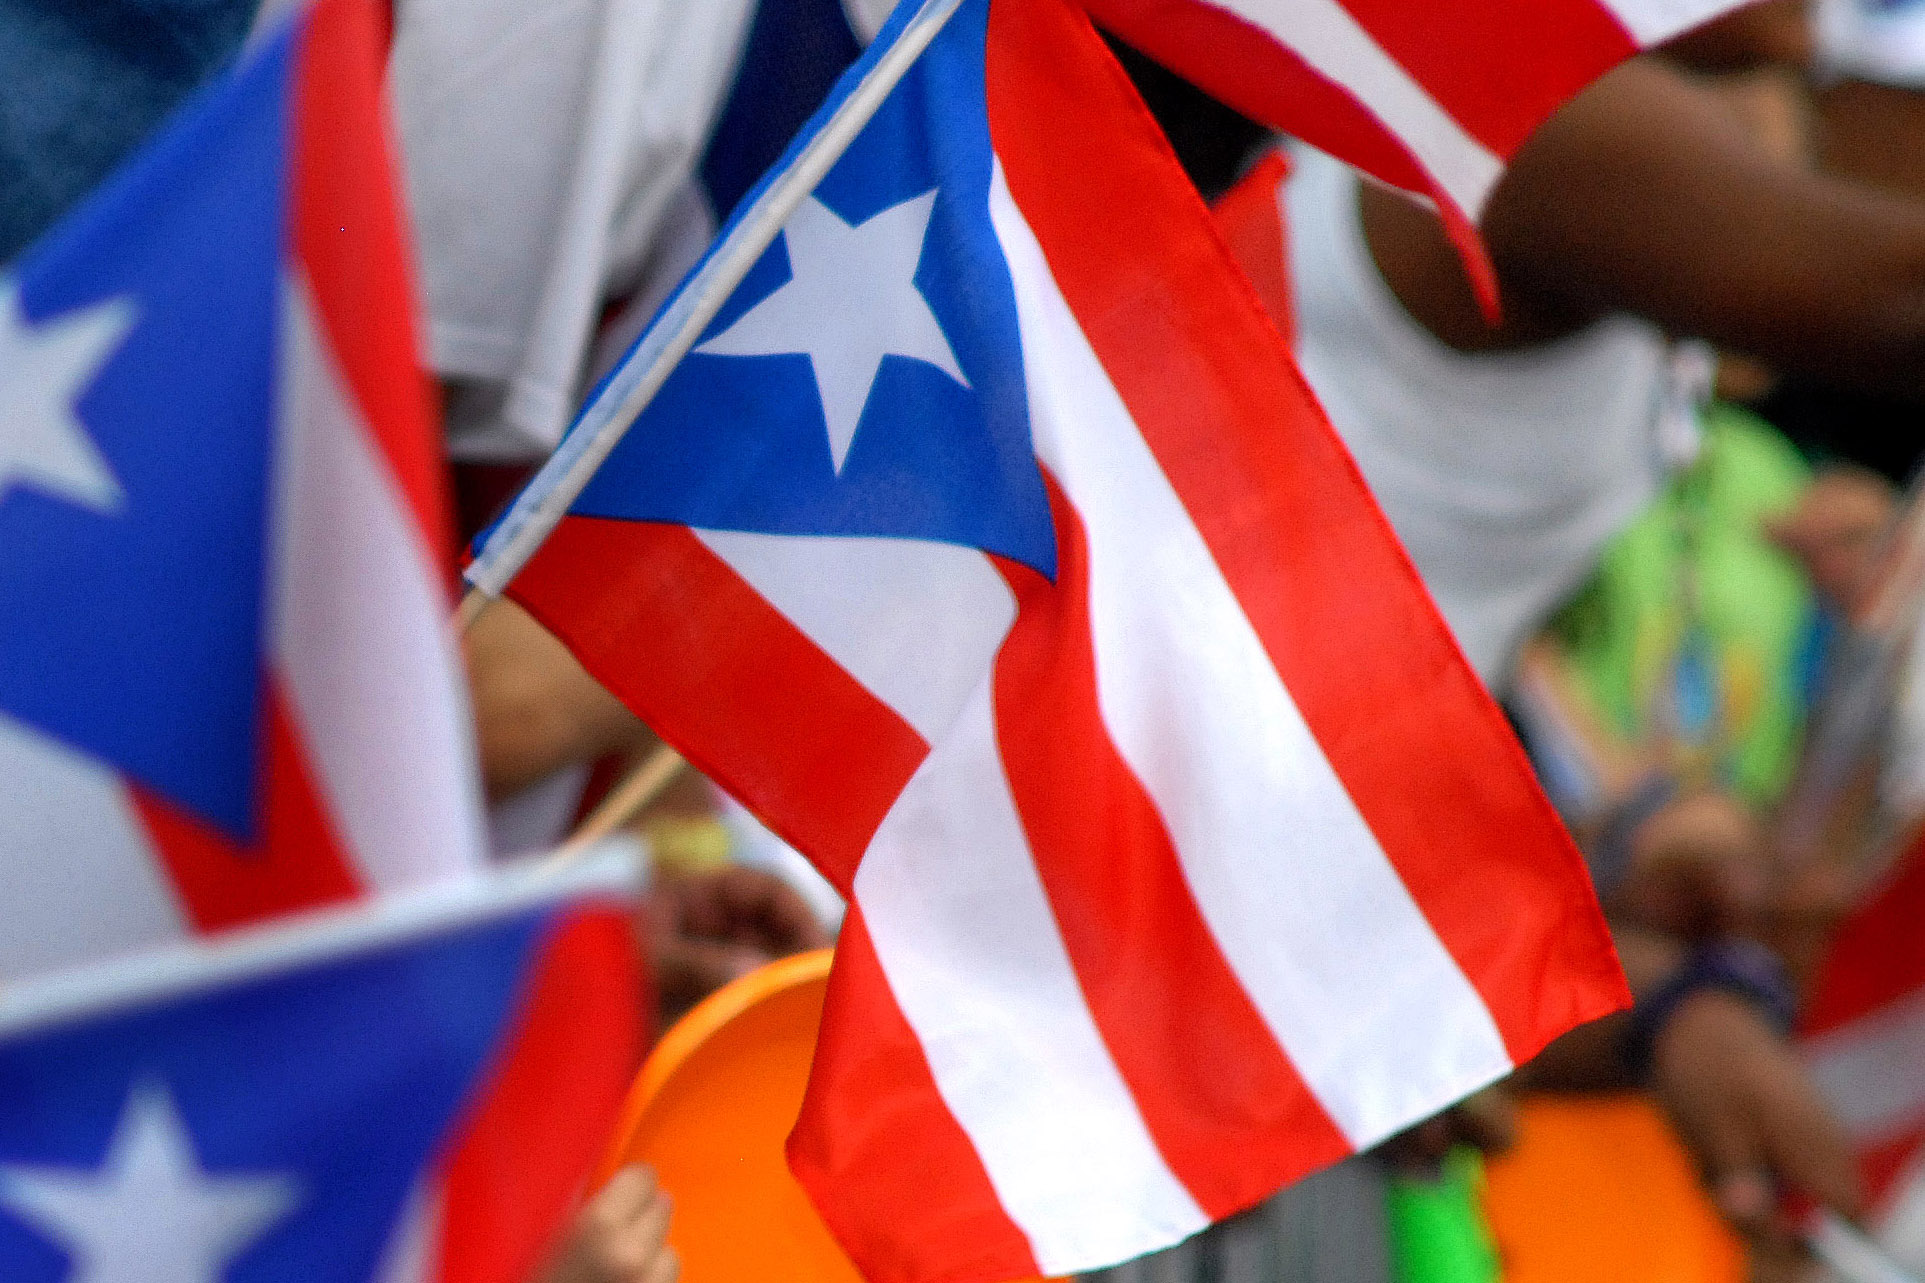 Puerto Rican Flag Wallpaper Desktop Rico Waving